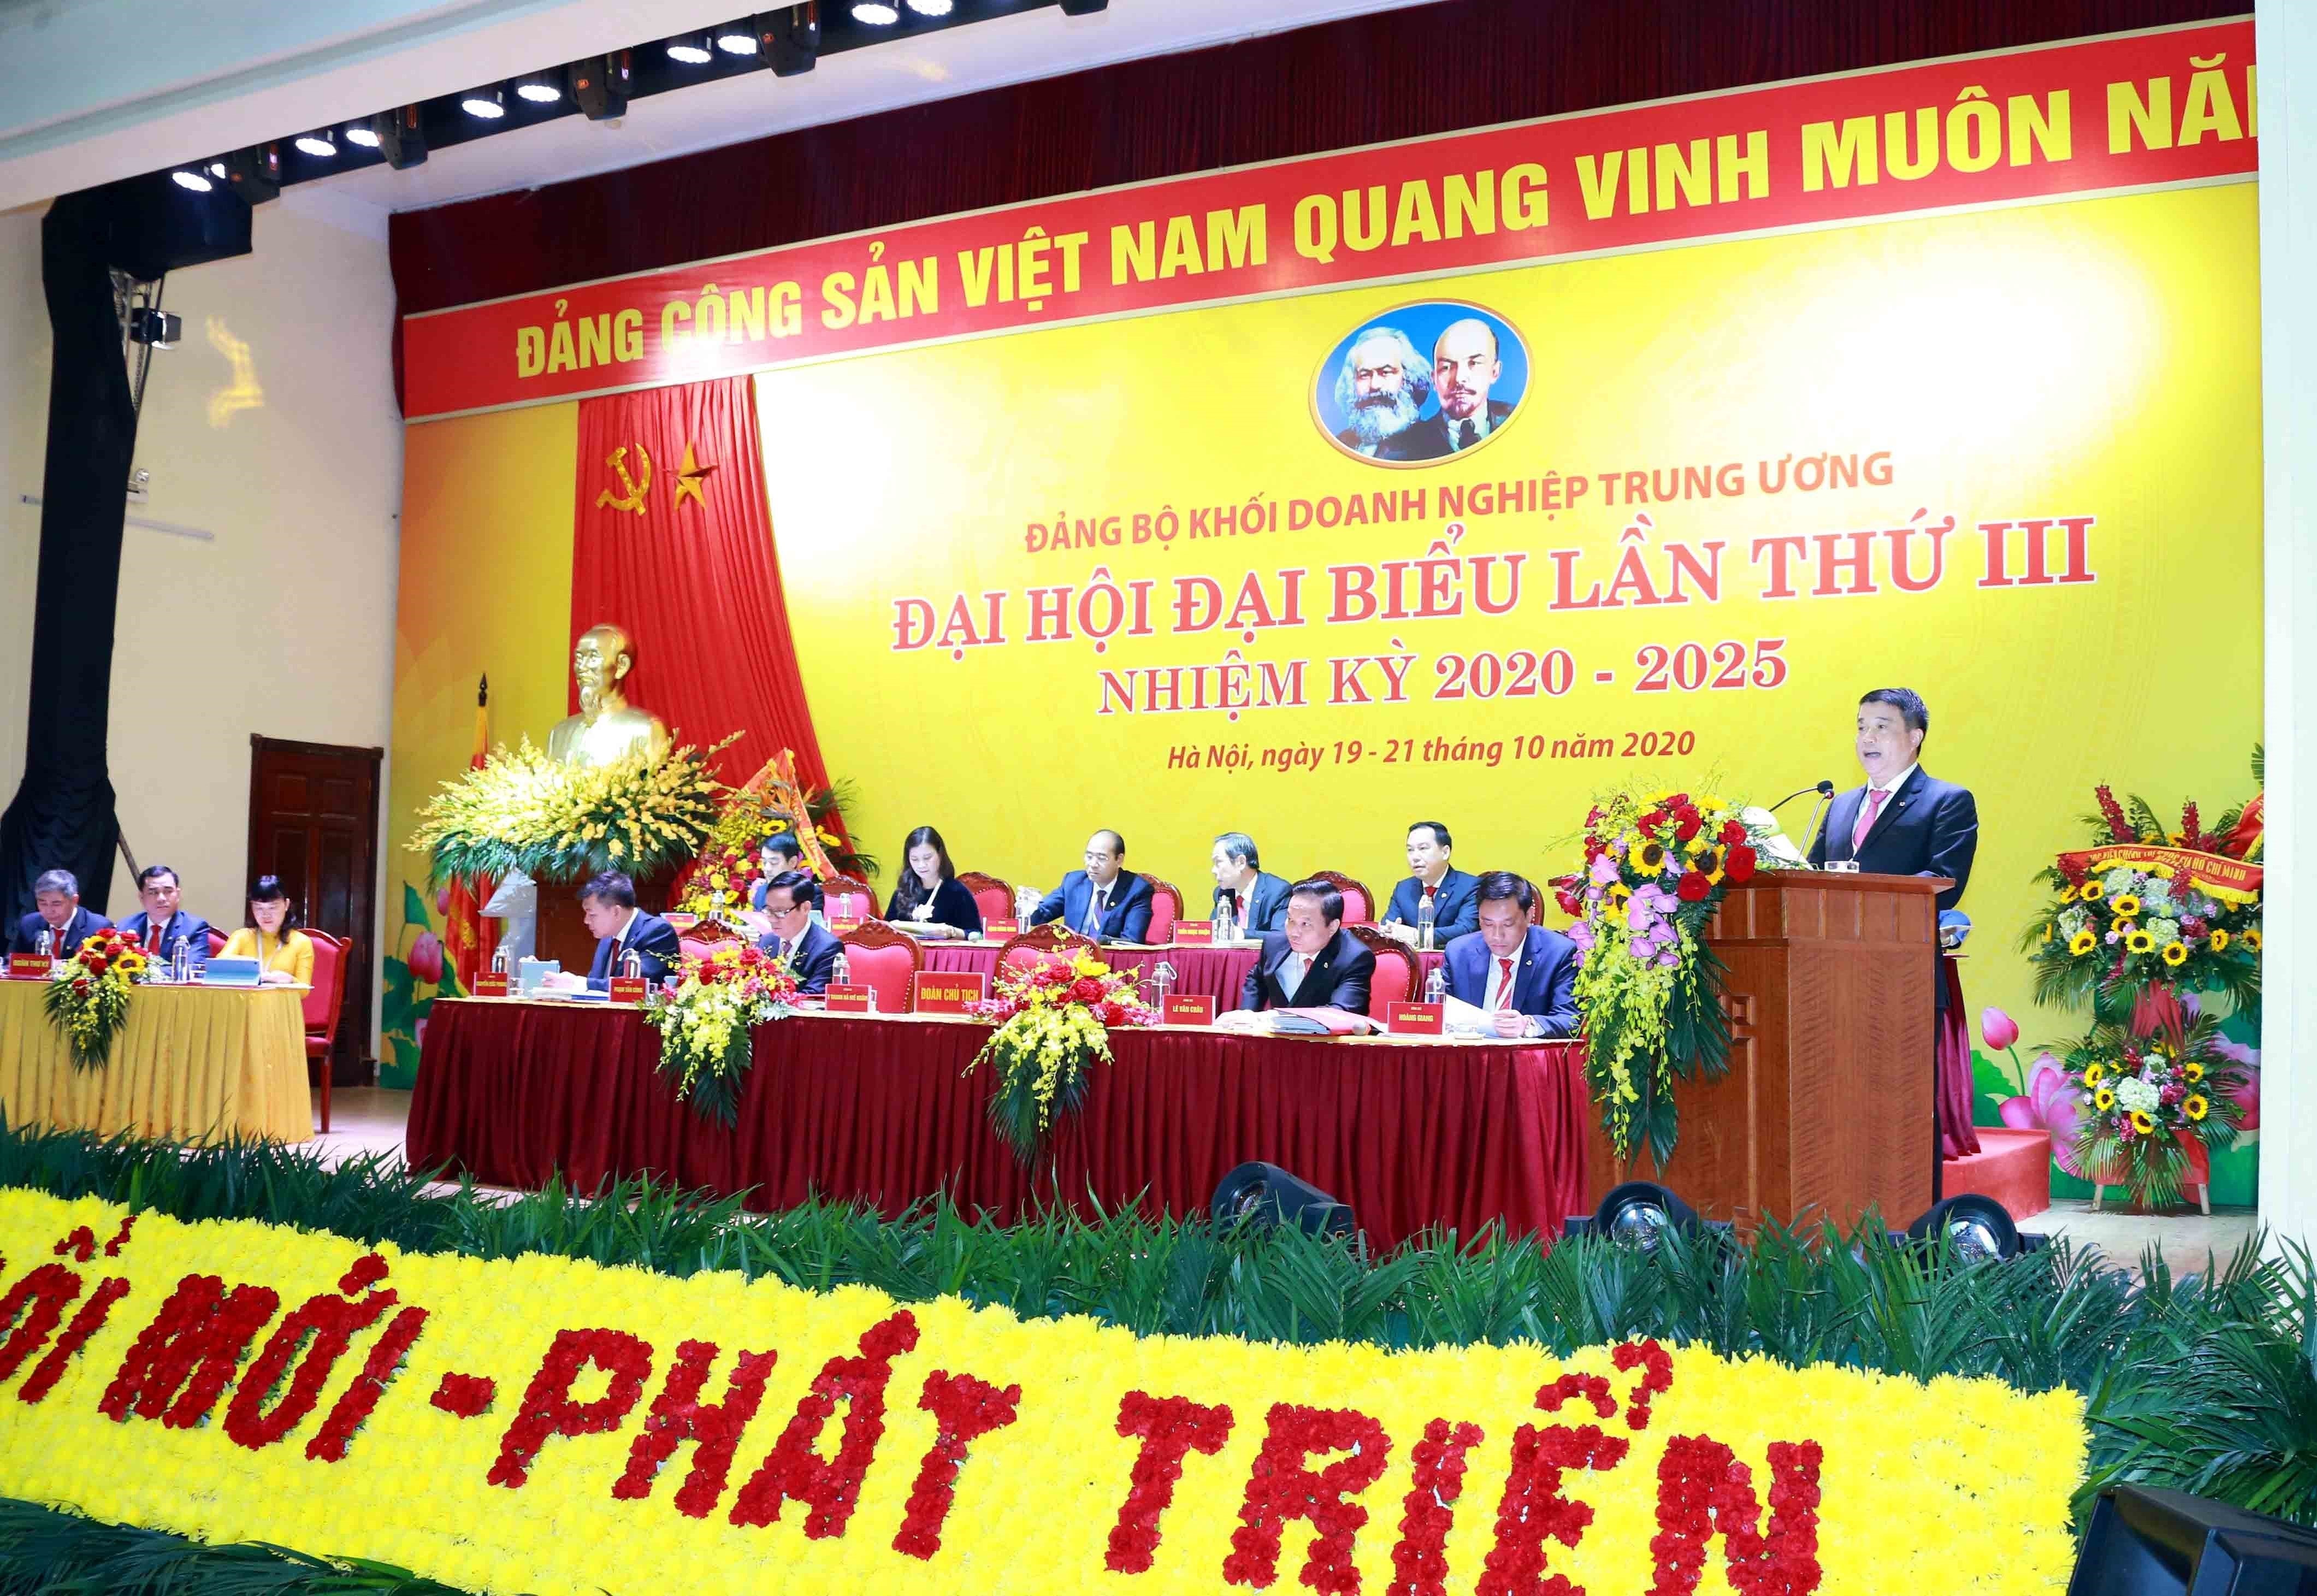 [Photo] Dai hoi dai bieu Dang bo Khoi Doanh nghiep Trung uong lan III hinh anh 3